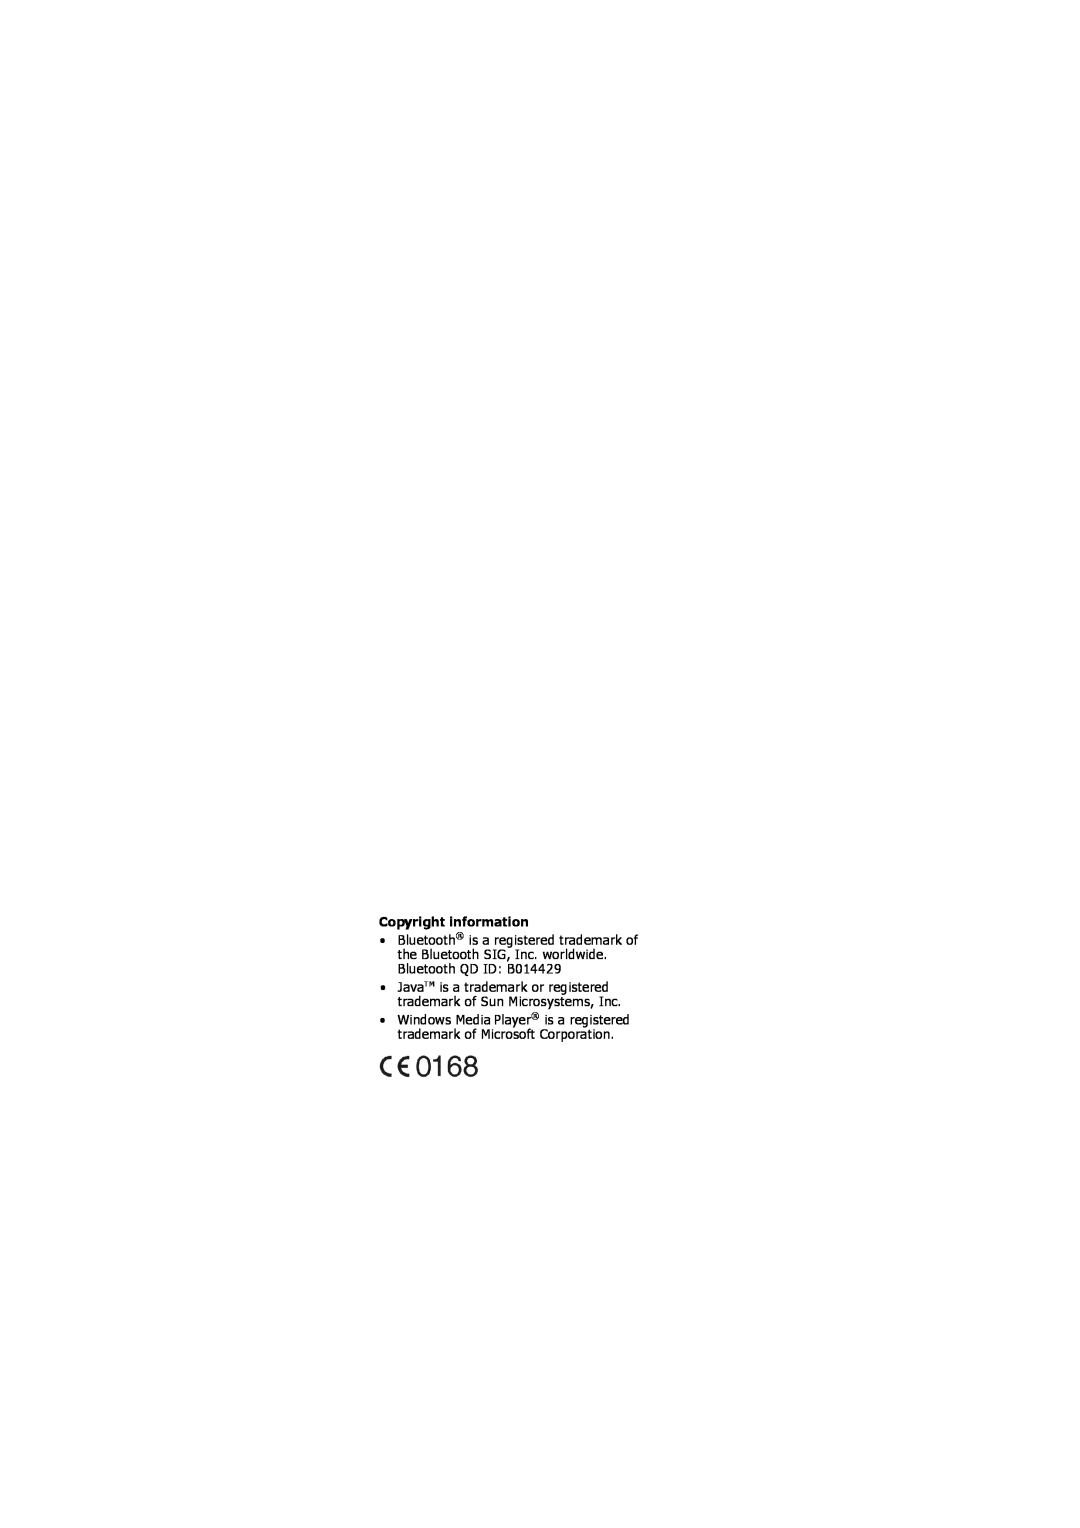 Samsung GH68-20883A manual Copyright information 